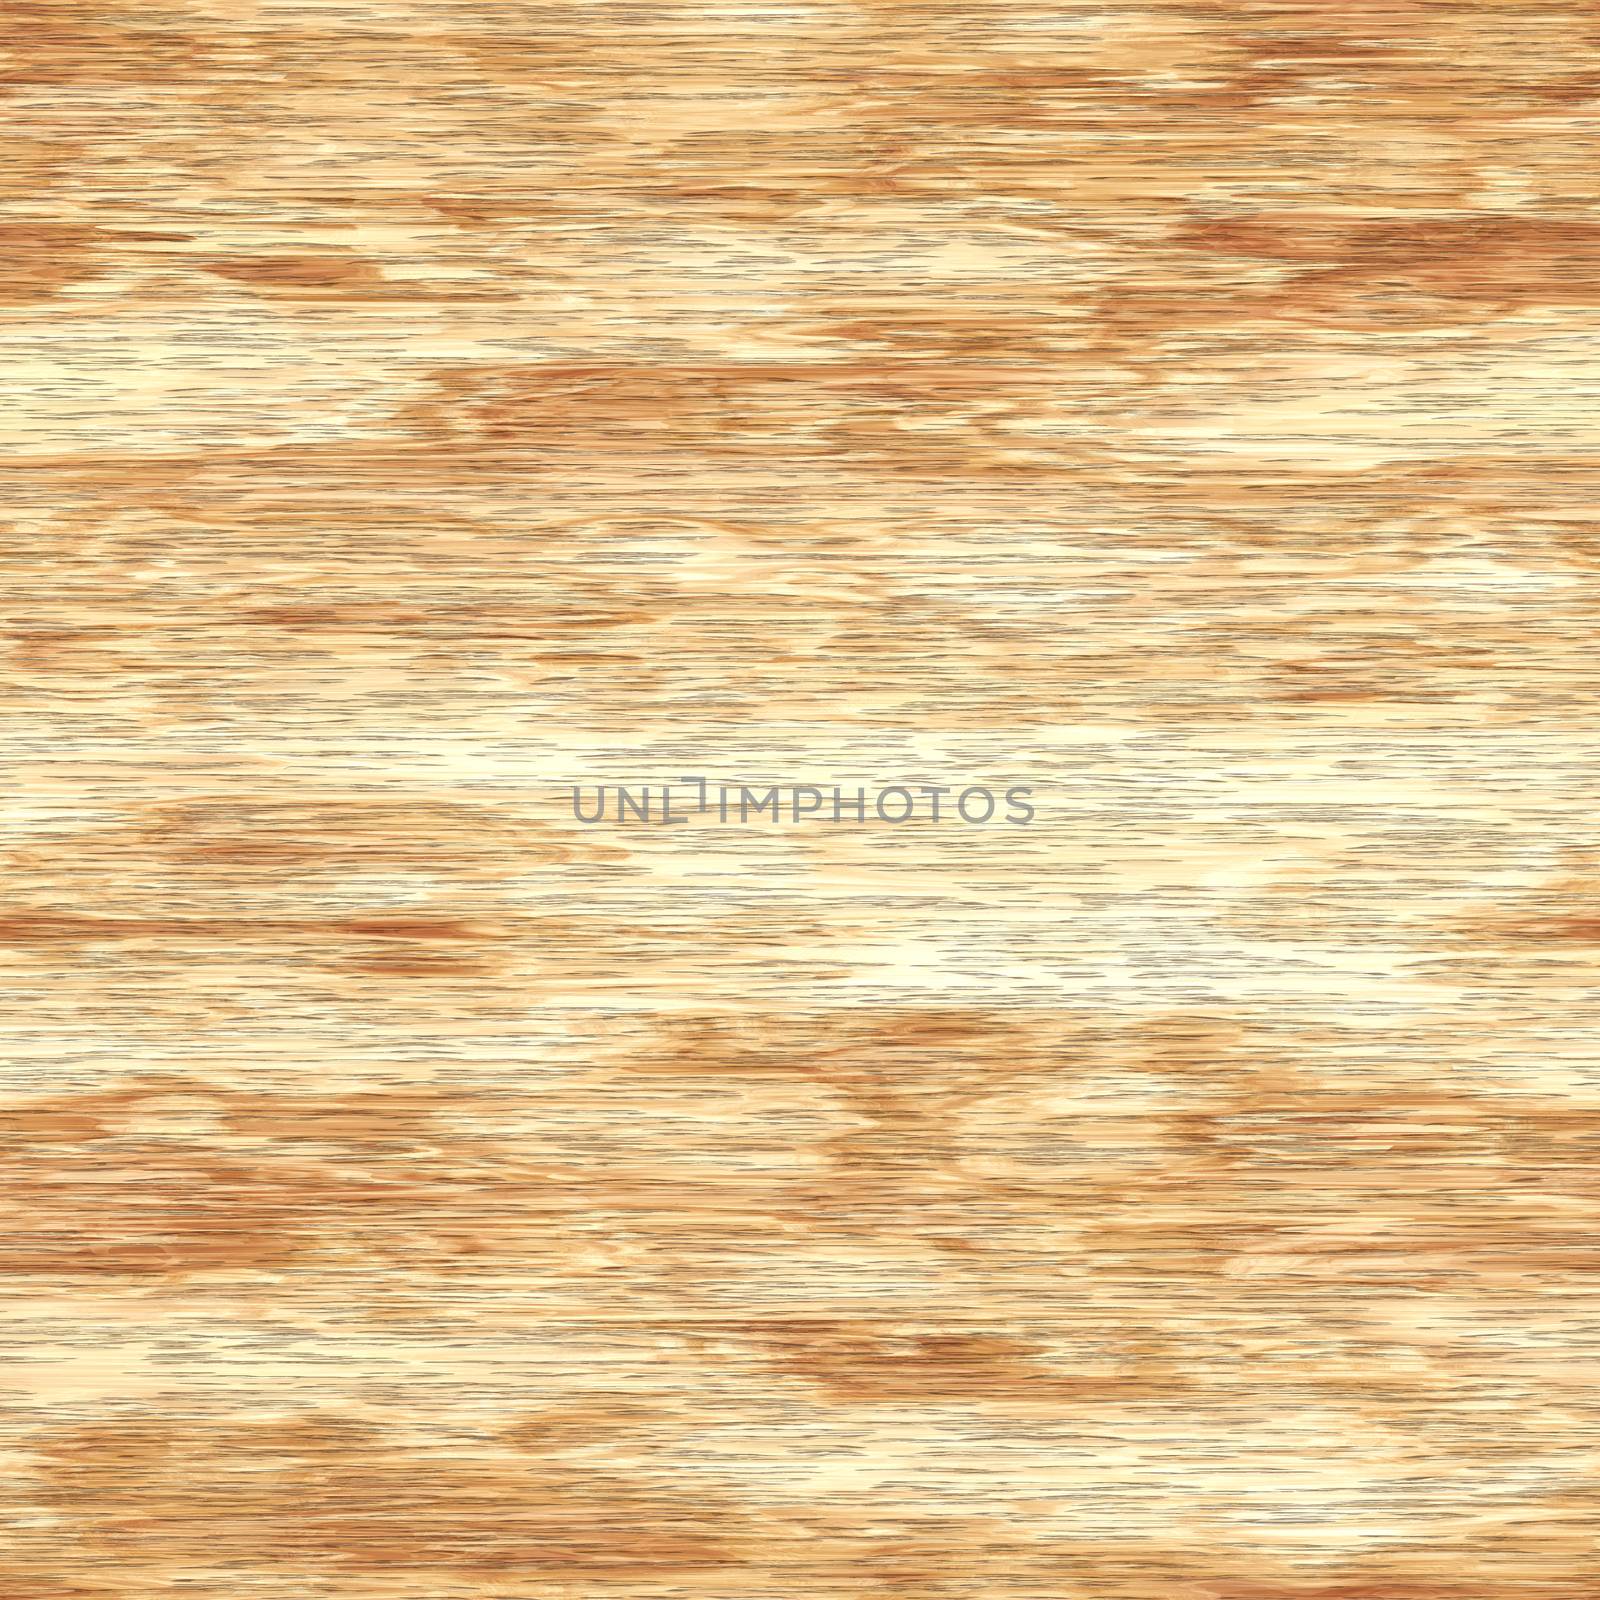 Grainy wood surface by Nanisimova